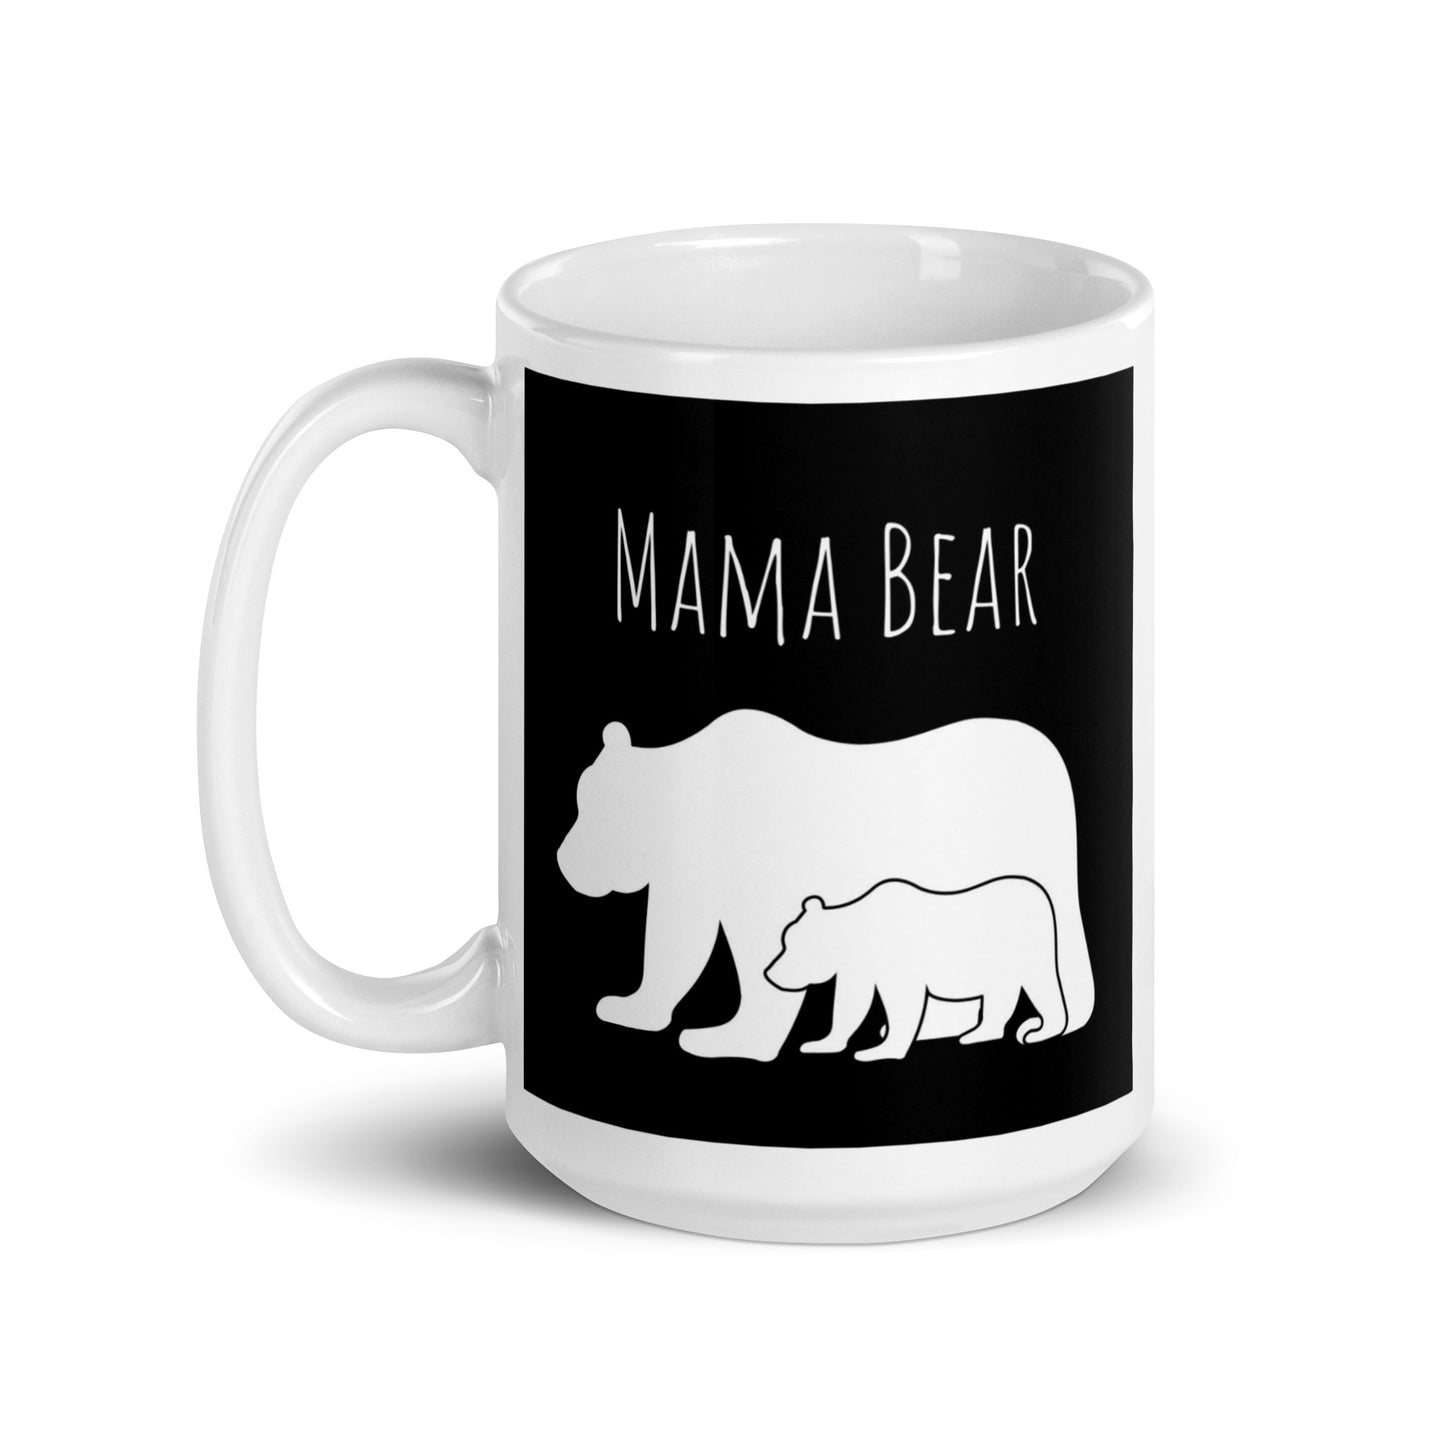 Mama Bear - White Glossy Mug - Gift - Mother's Day - Birthday